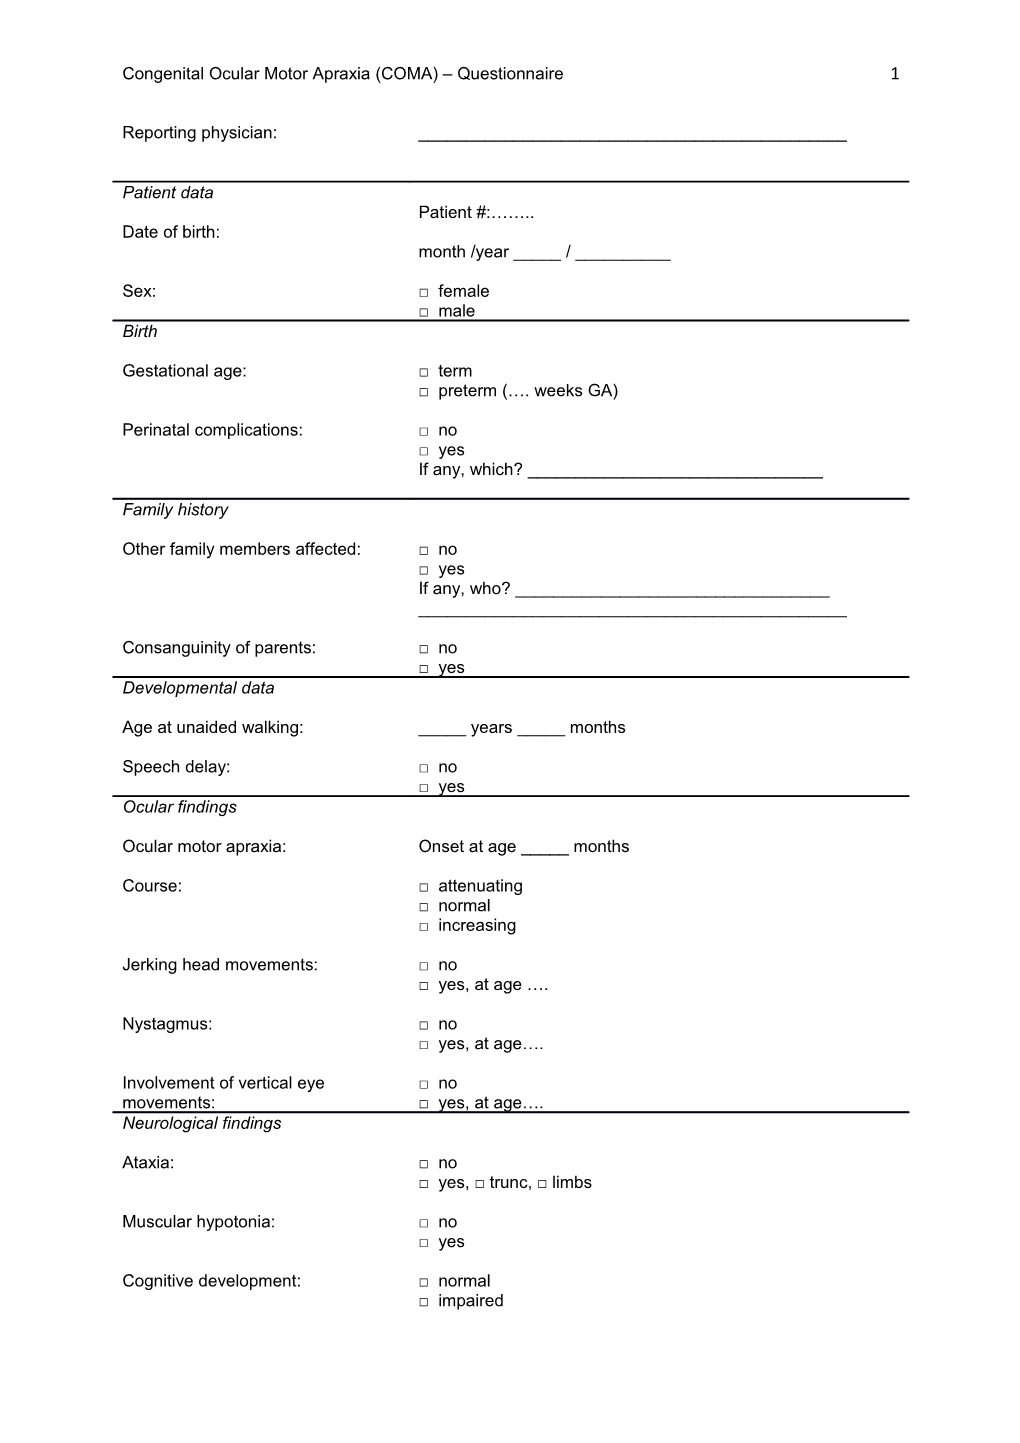 Congenital Ocular Motor Apraxia (COMA) Questionnaire1